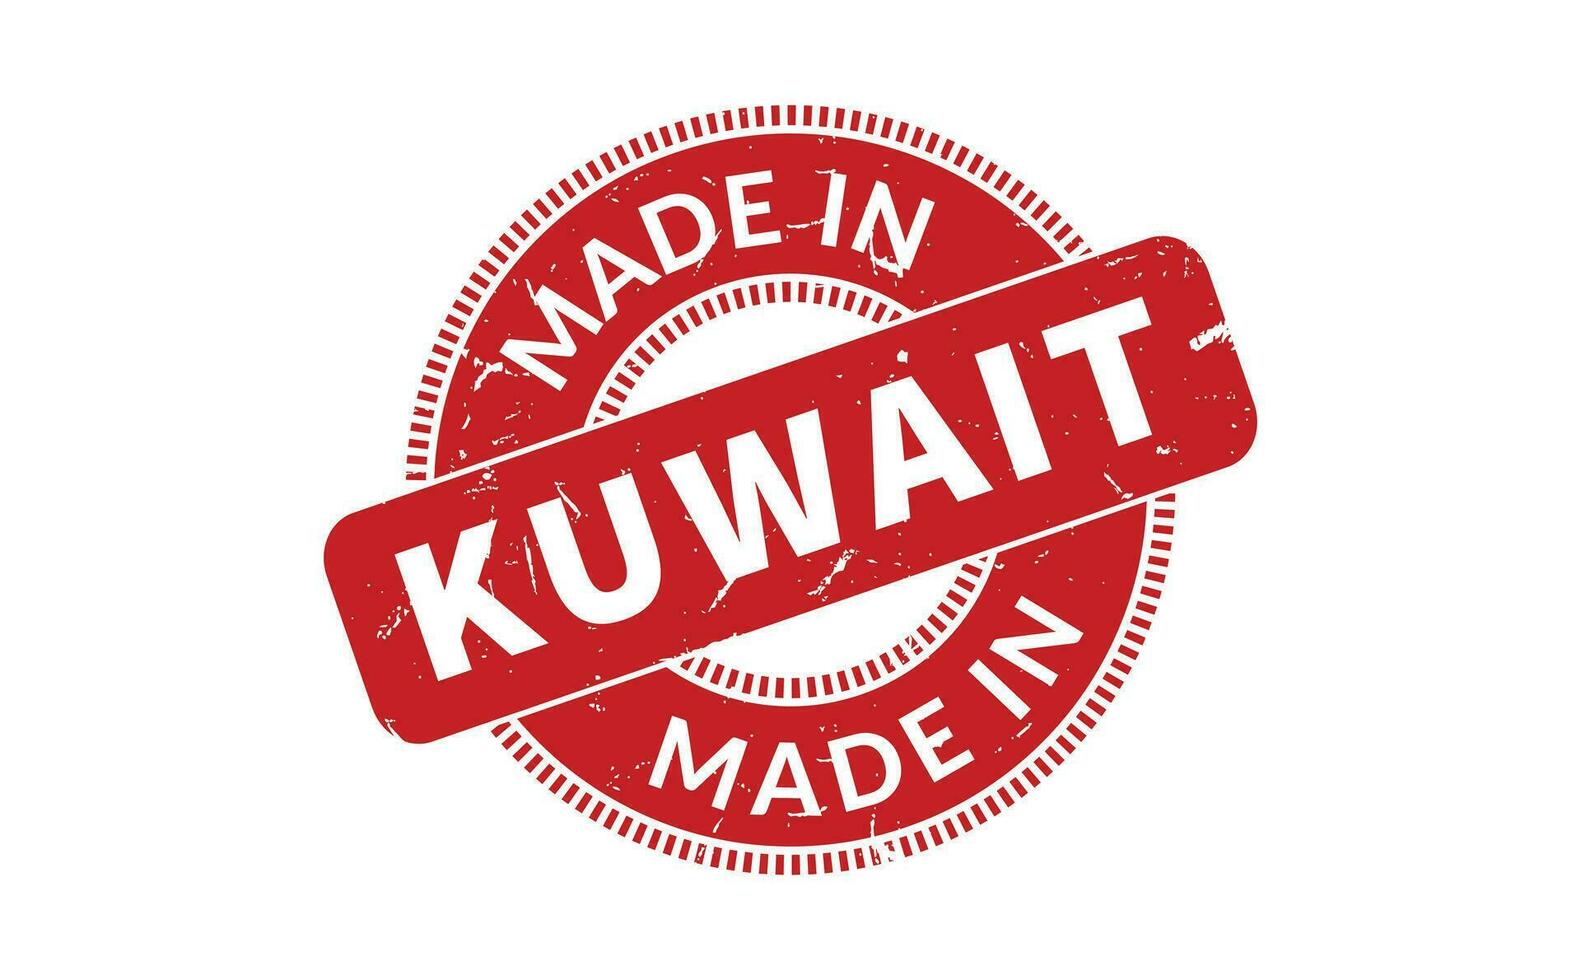 hecho en Kuwait caucho sello vector